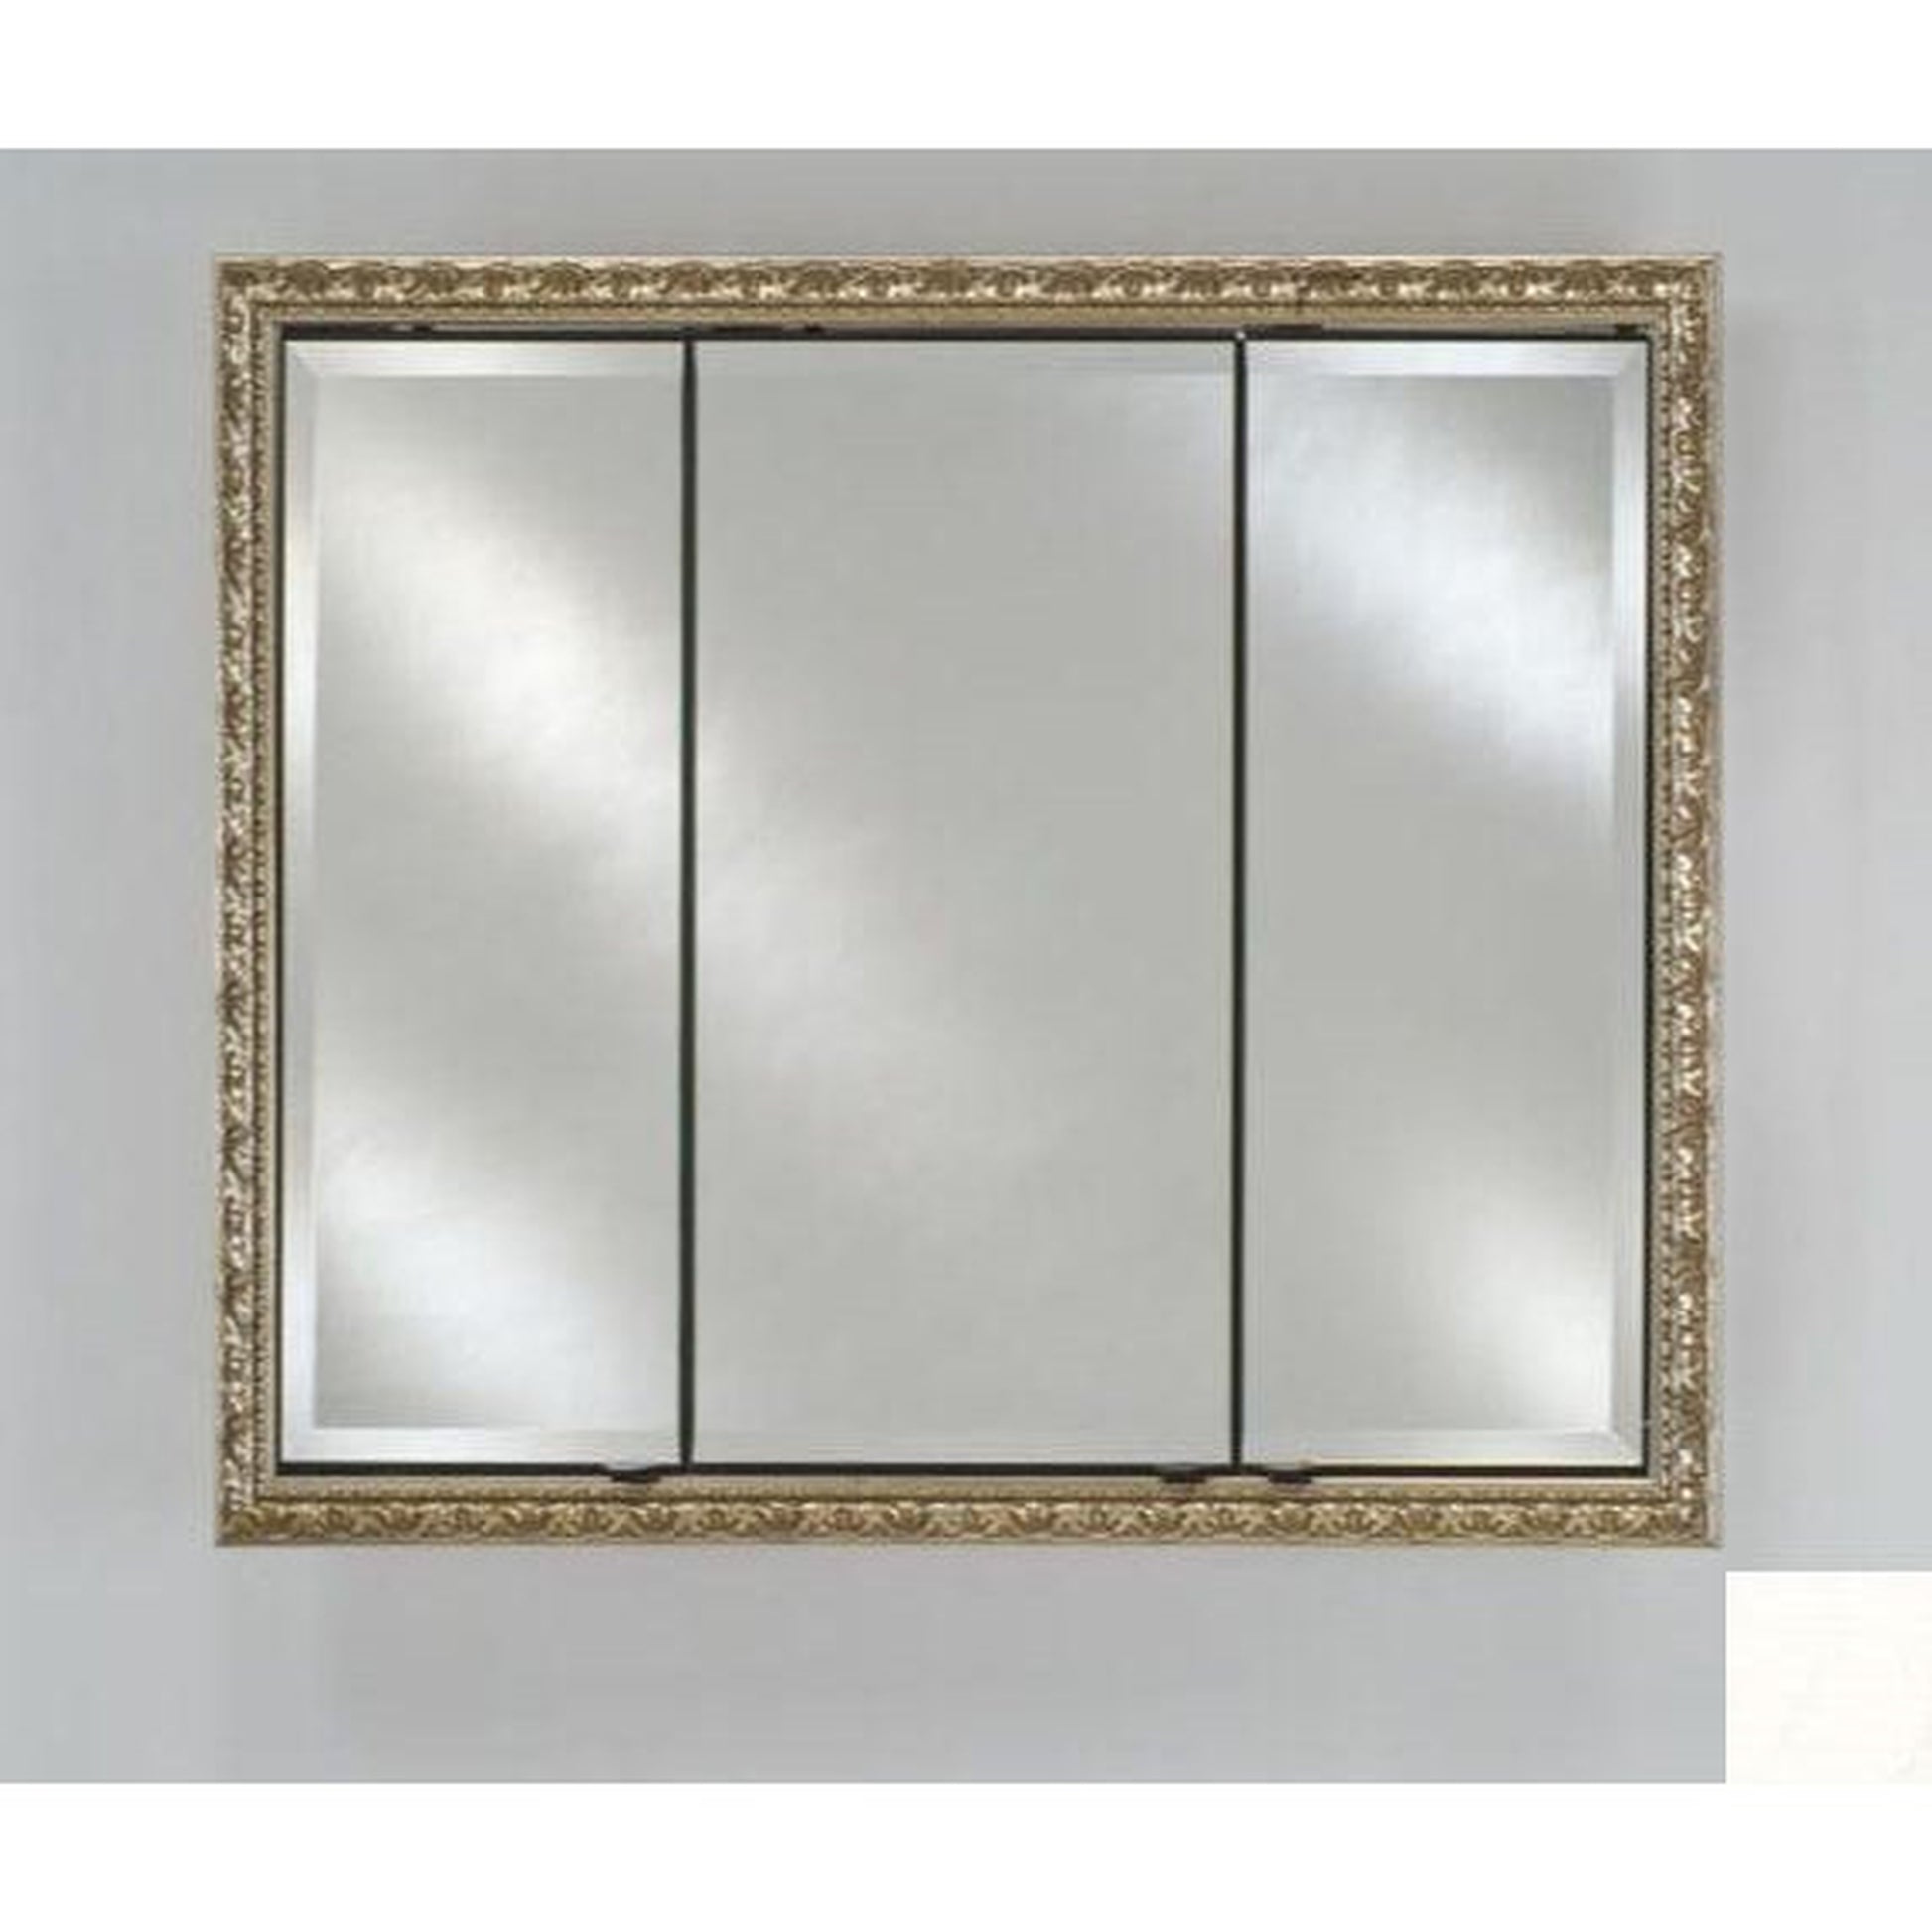 Afina Signature 44" x 30" Arlington White Recessed Triple Door Medicine Cabinet With Beveled Edge Mirror